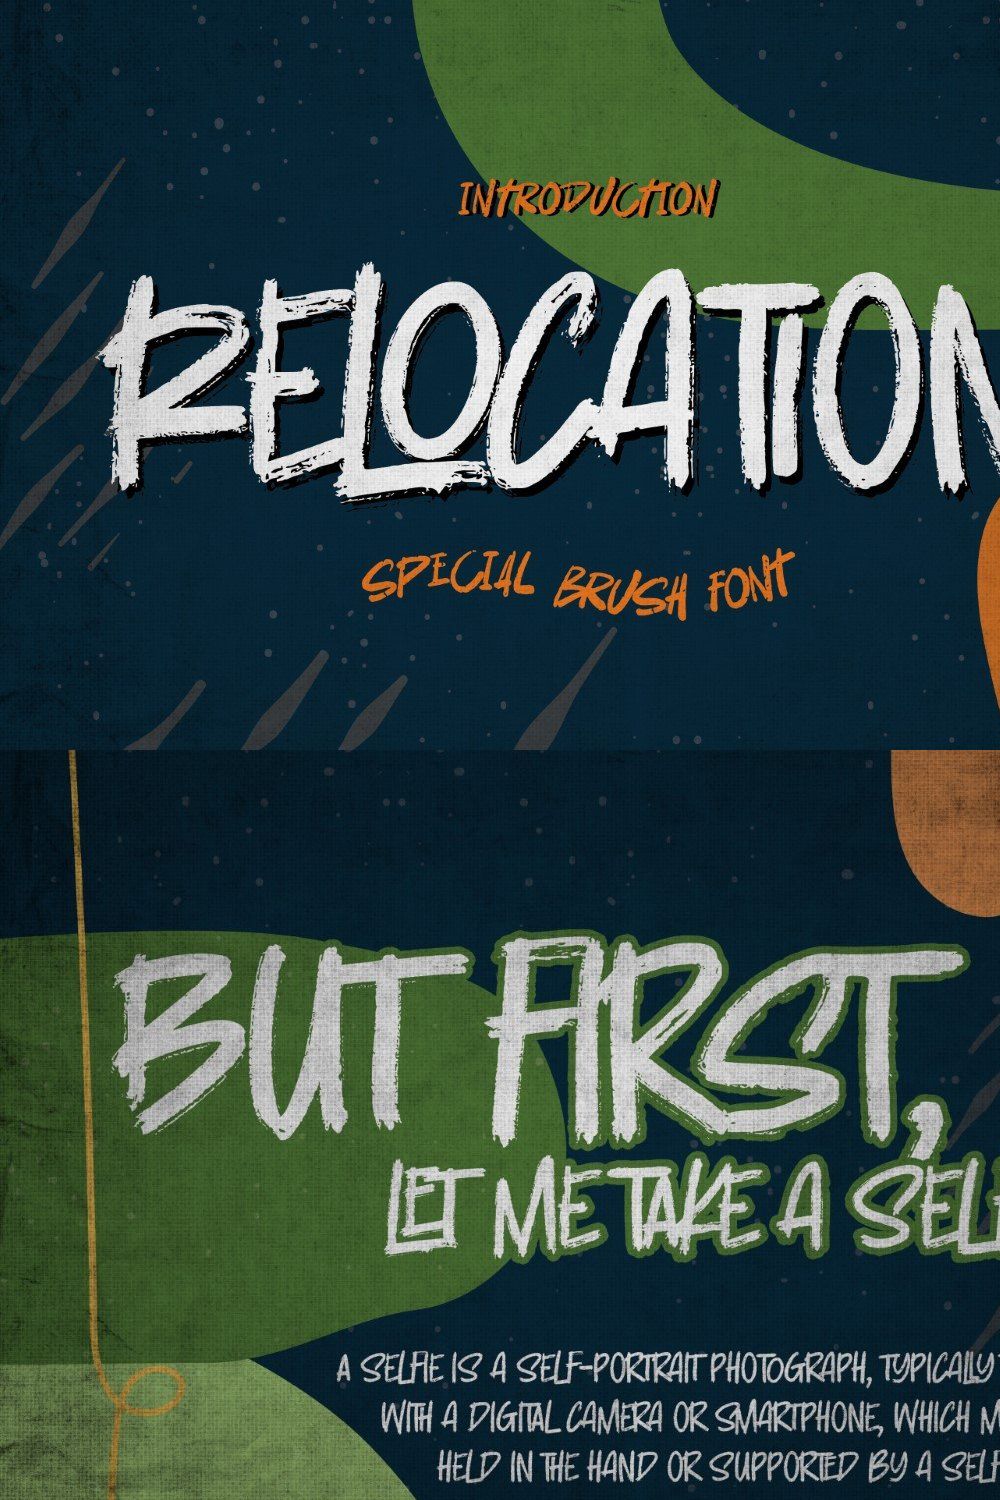 Relocation - Rough Brush Horror Font pinterest preview image.